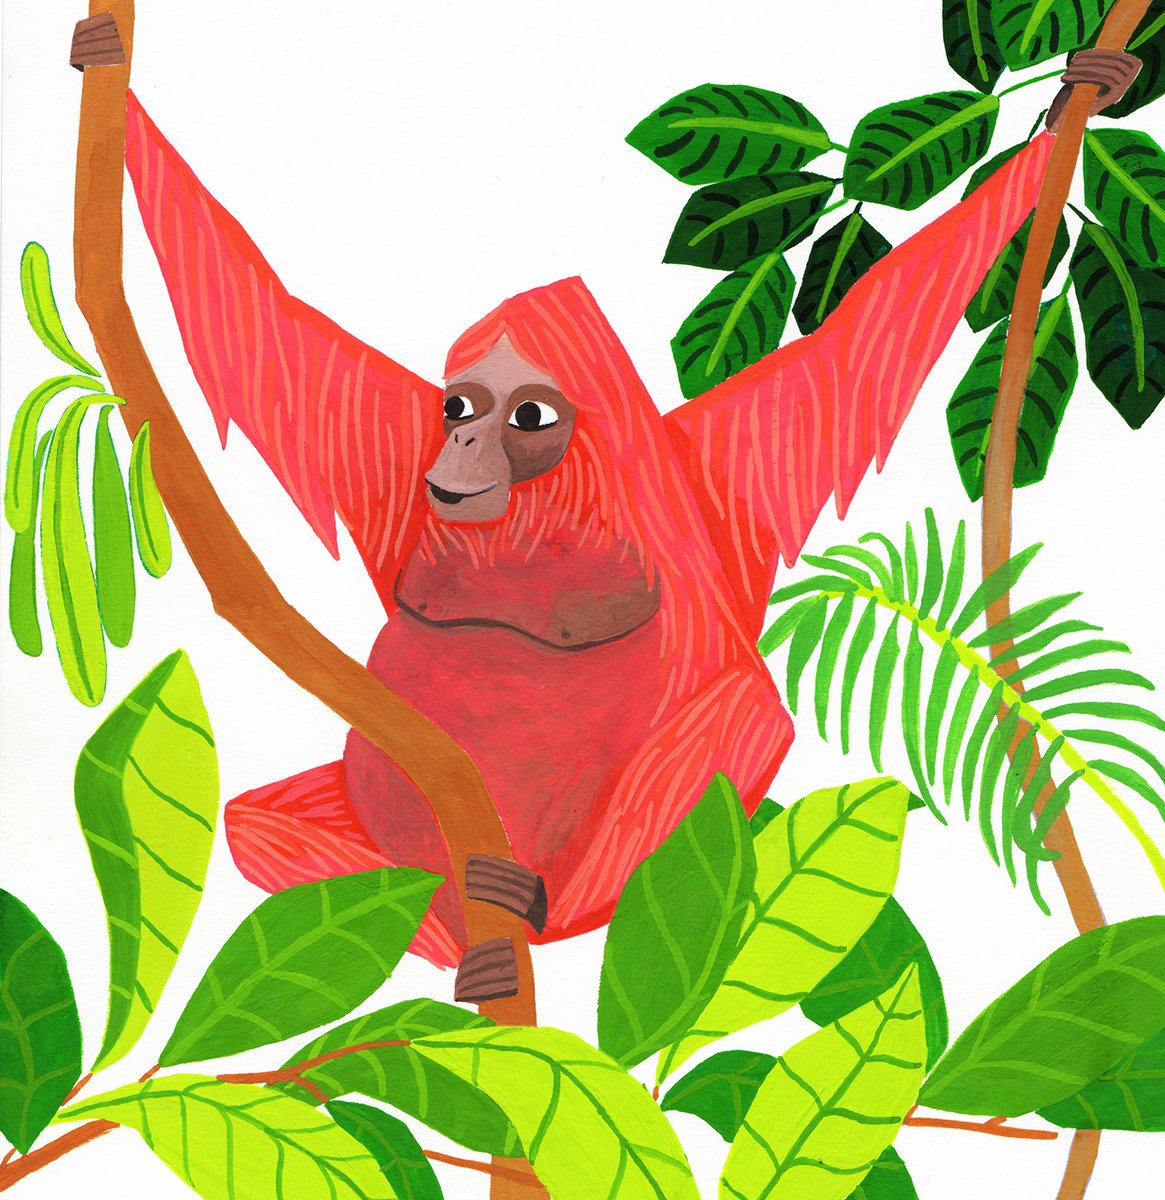 Happy International Orangutan Day! Orang hutan is Malay for 'person of the forest.' #InternationalOrangutanDay #orangutan